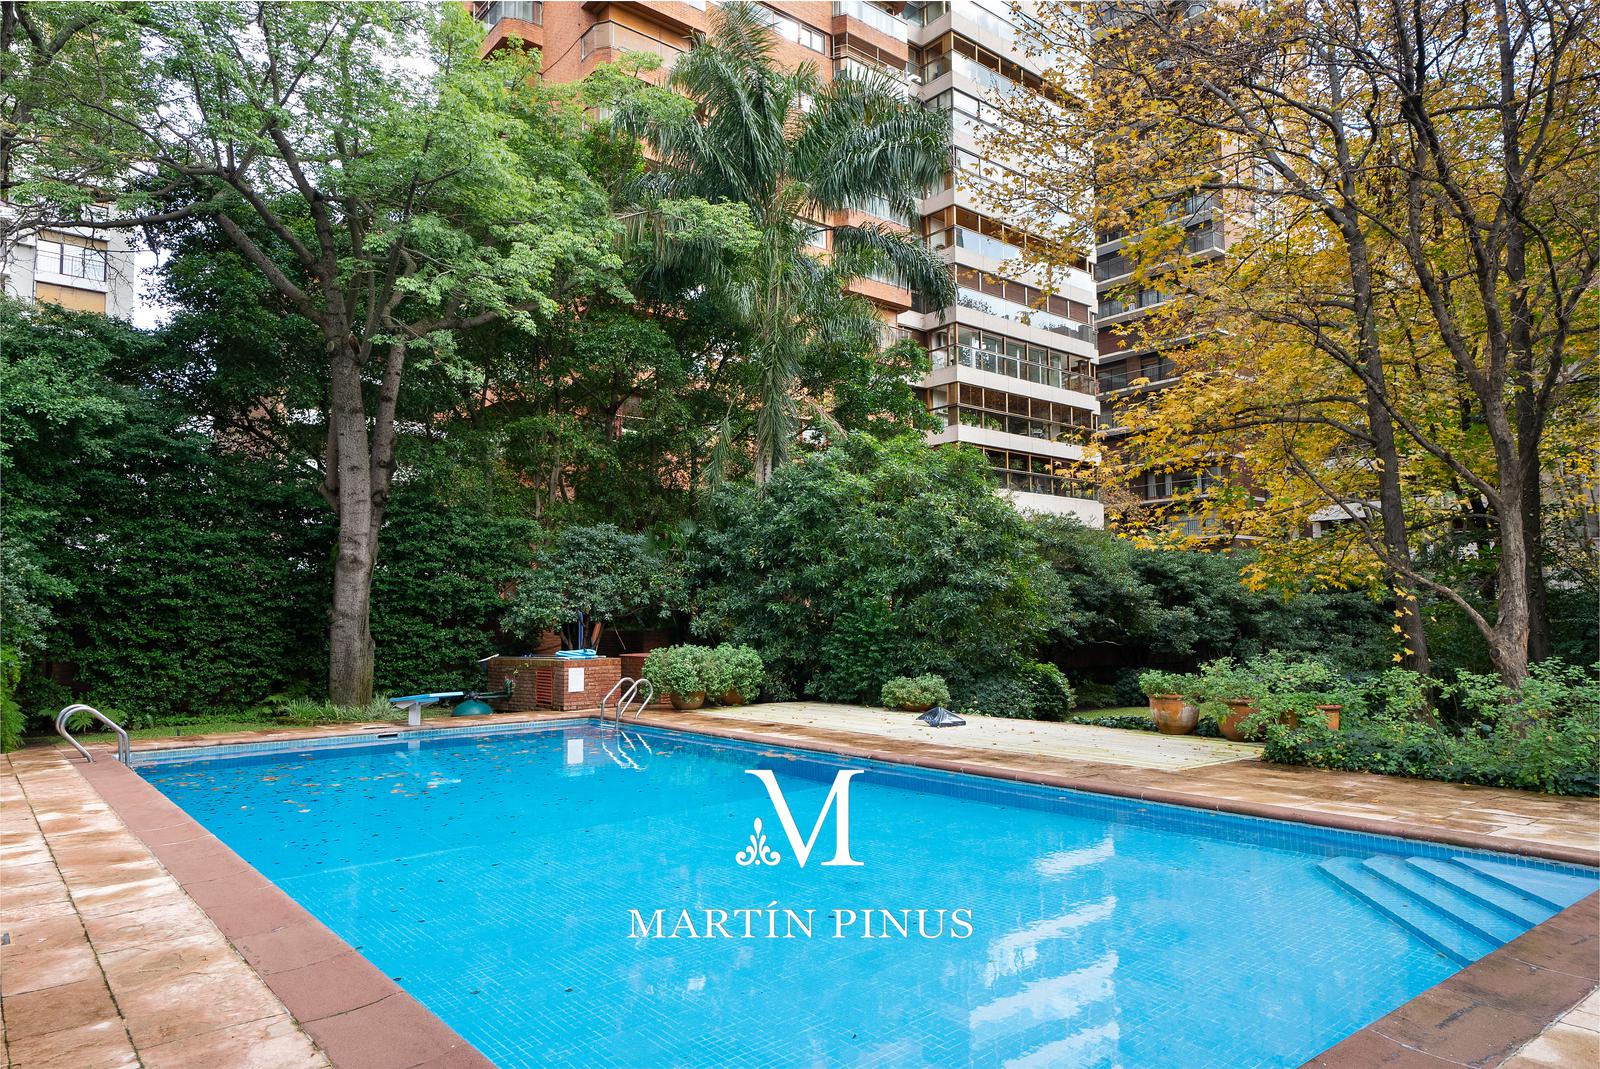 #5179783 | Sale | Apartment | Belgrano Barrancas (Martin Pinus)